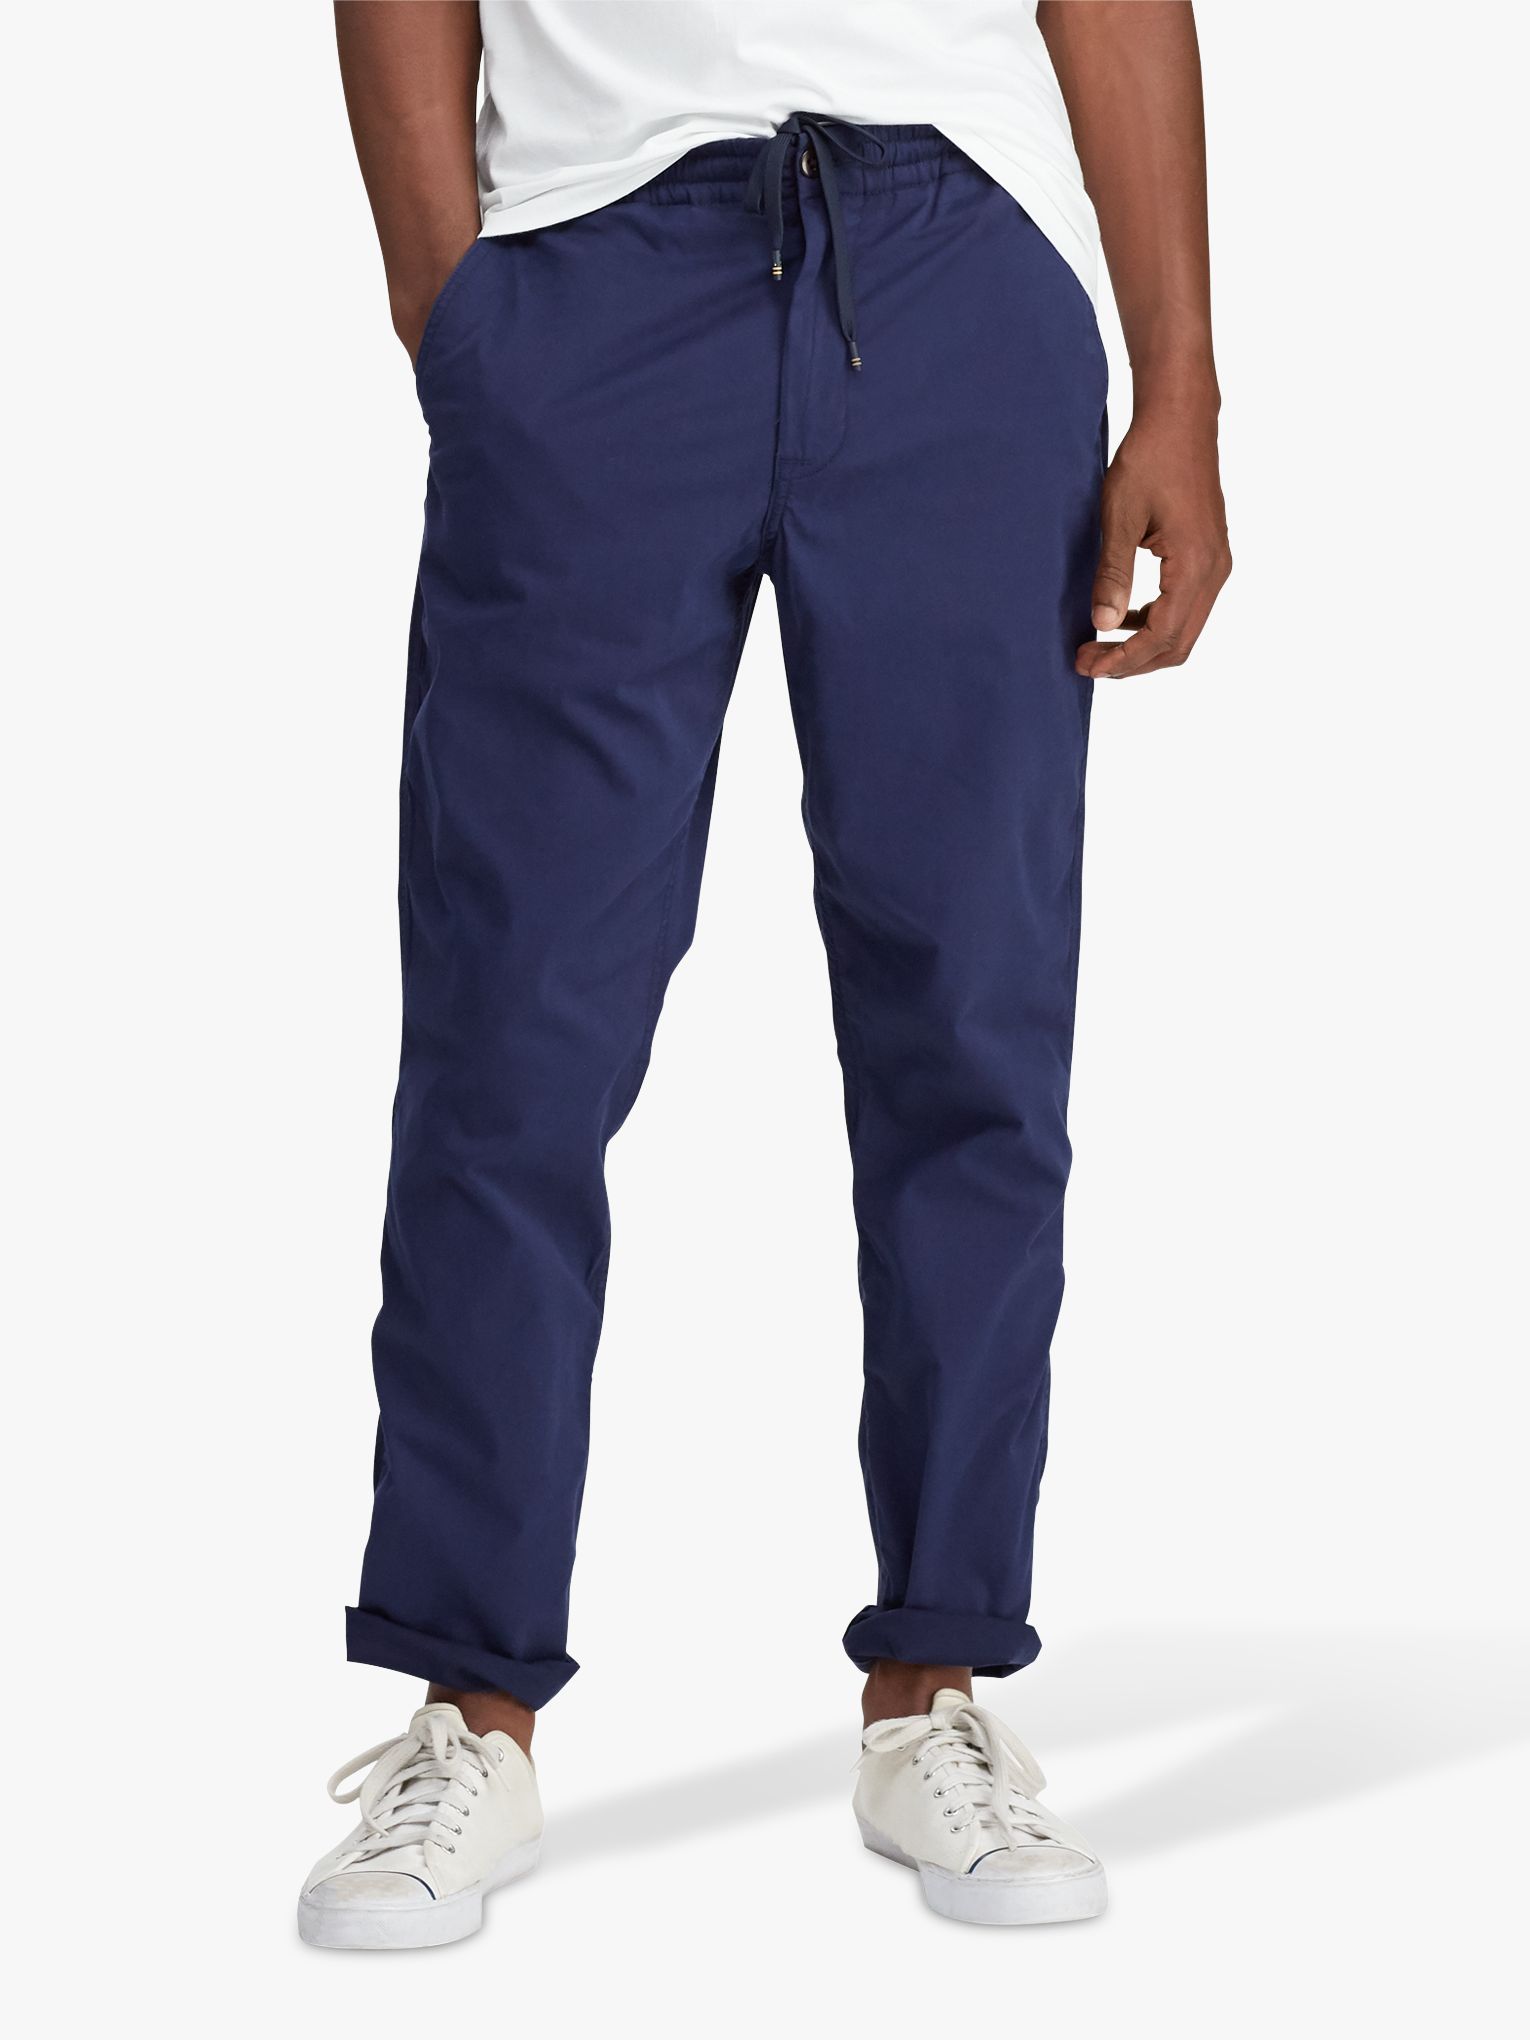 Polo Ralph Lauren POLO PREPSTER TAILORED SLIM FIT TROUSER - Trousers -  navy/dark blue - Zalando.de